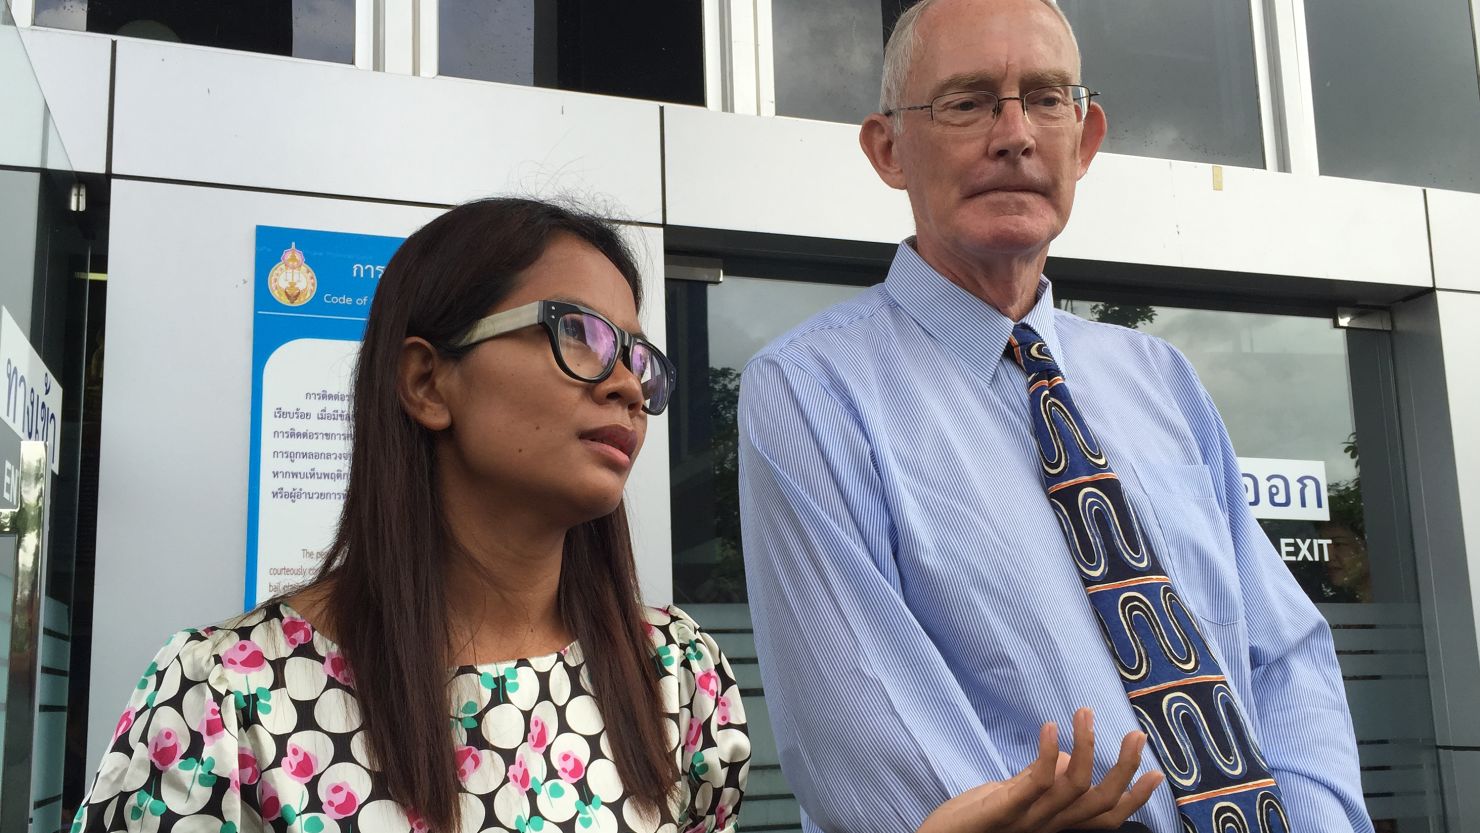 Phuketwan journalist Chutima Sidasathian and editor Alan Morison have been acquitted of defamation